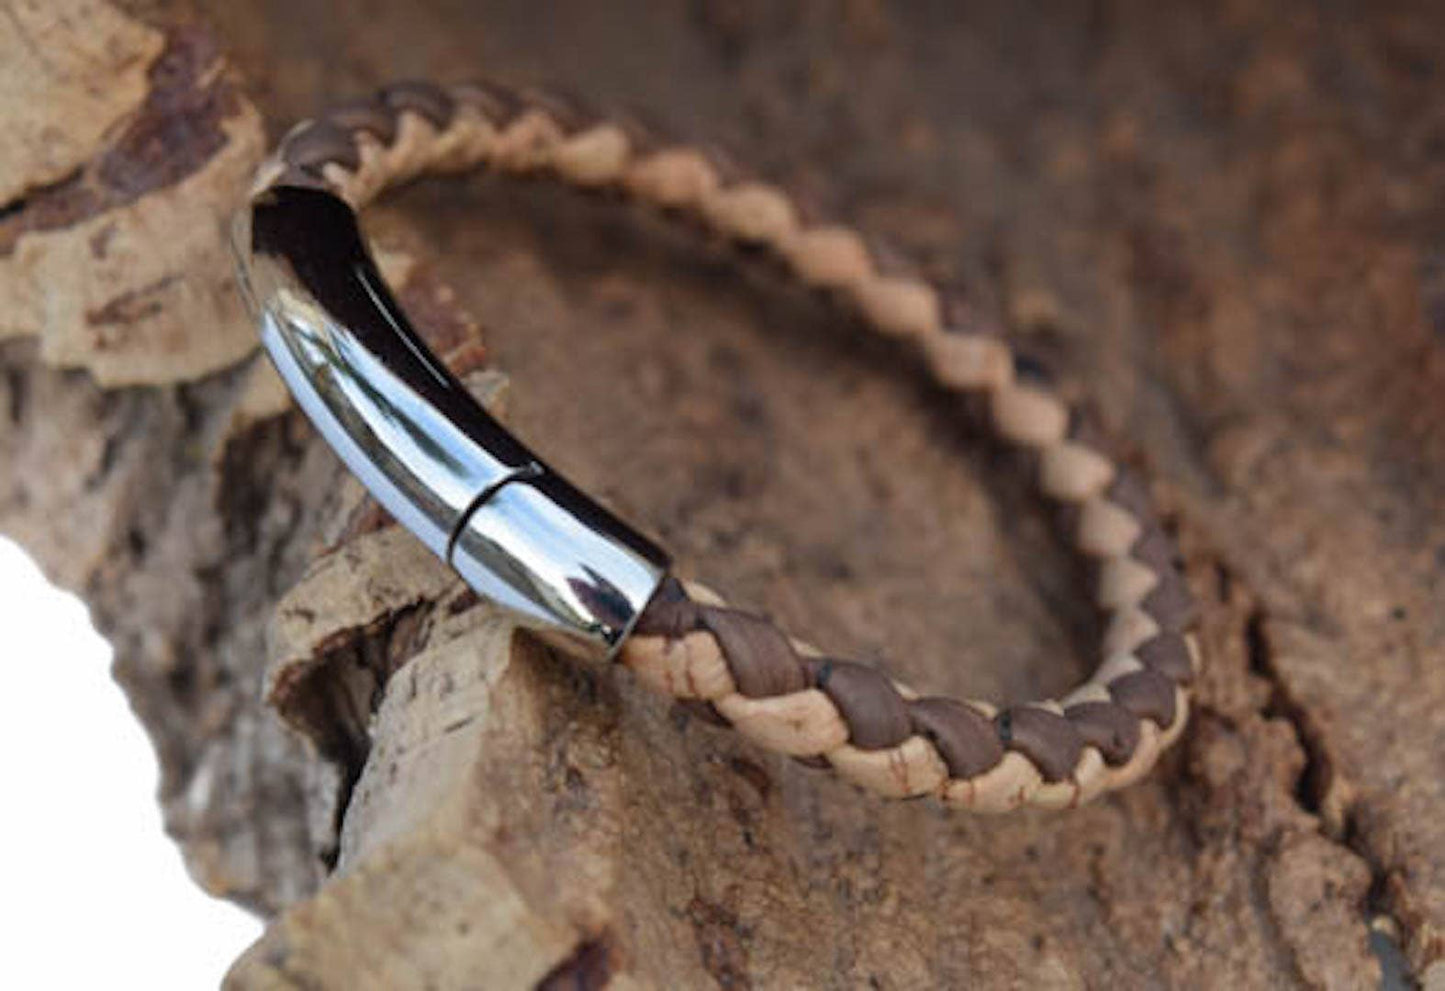 Cork Bracelet